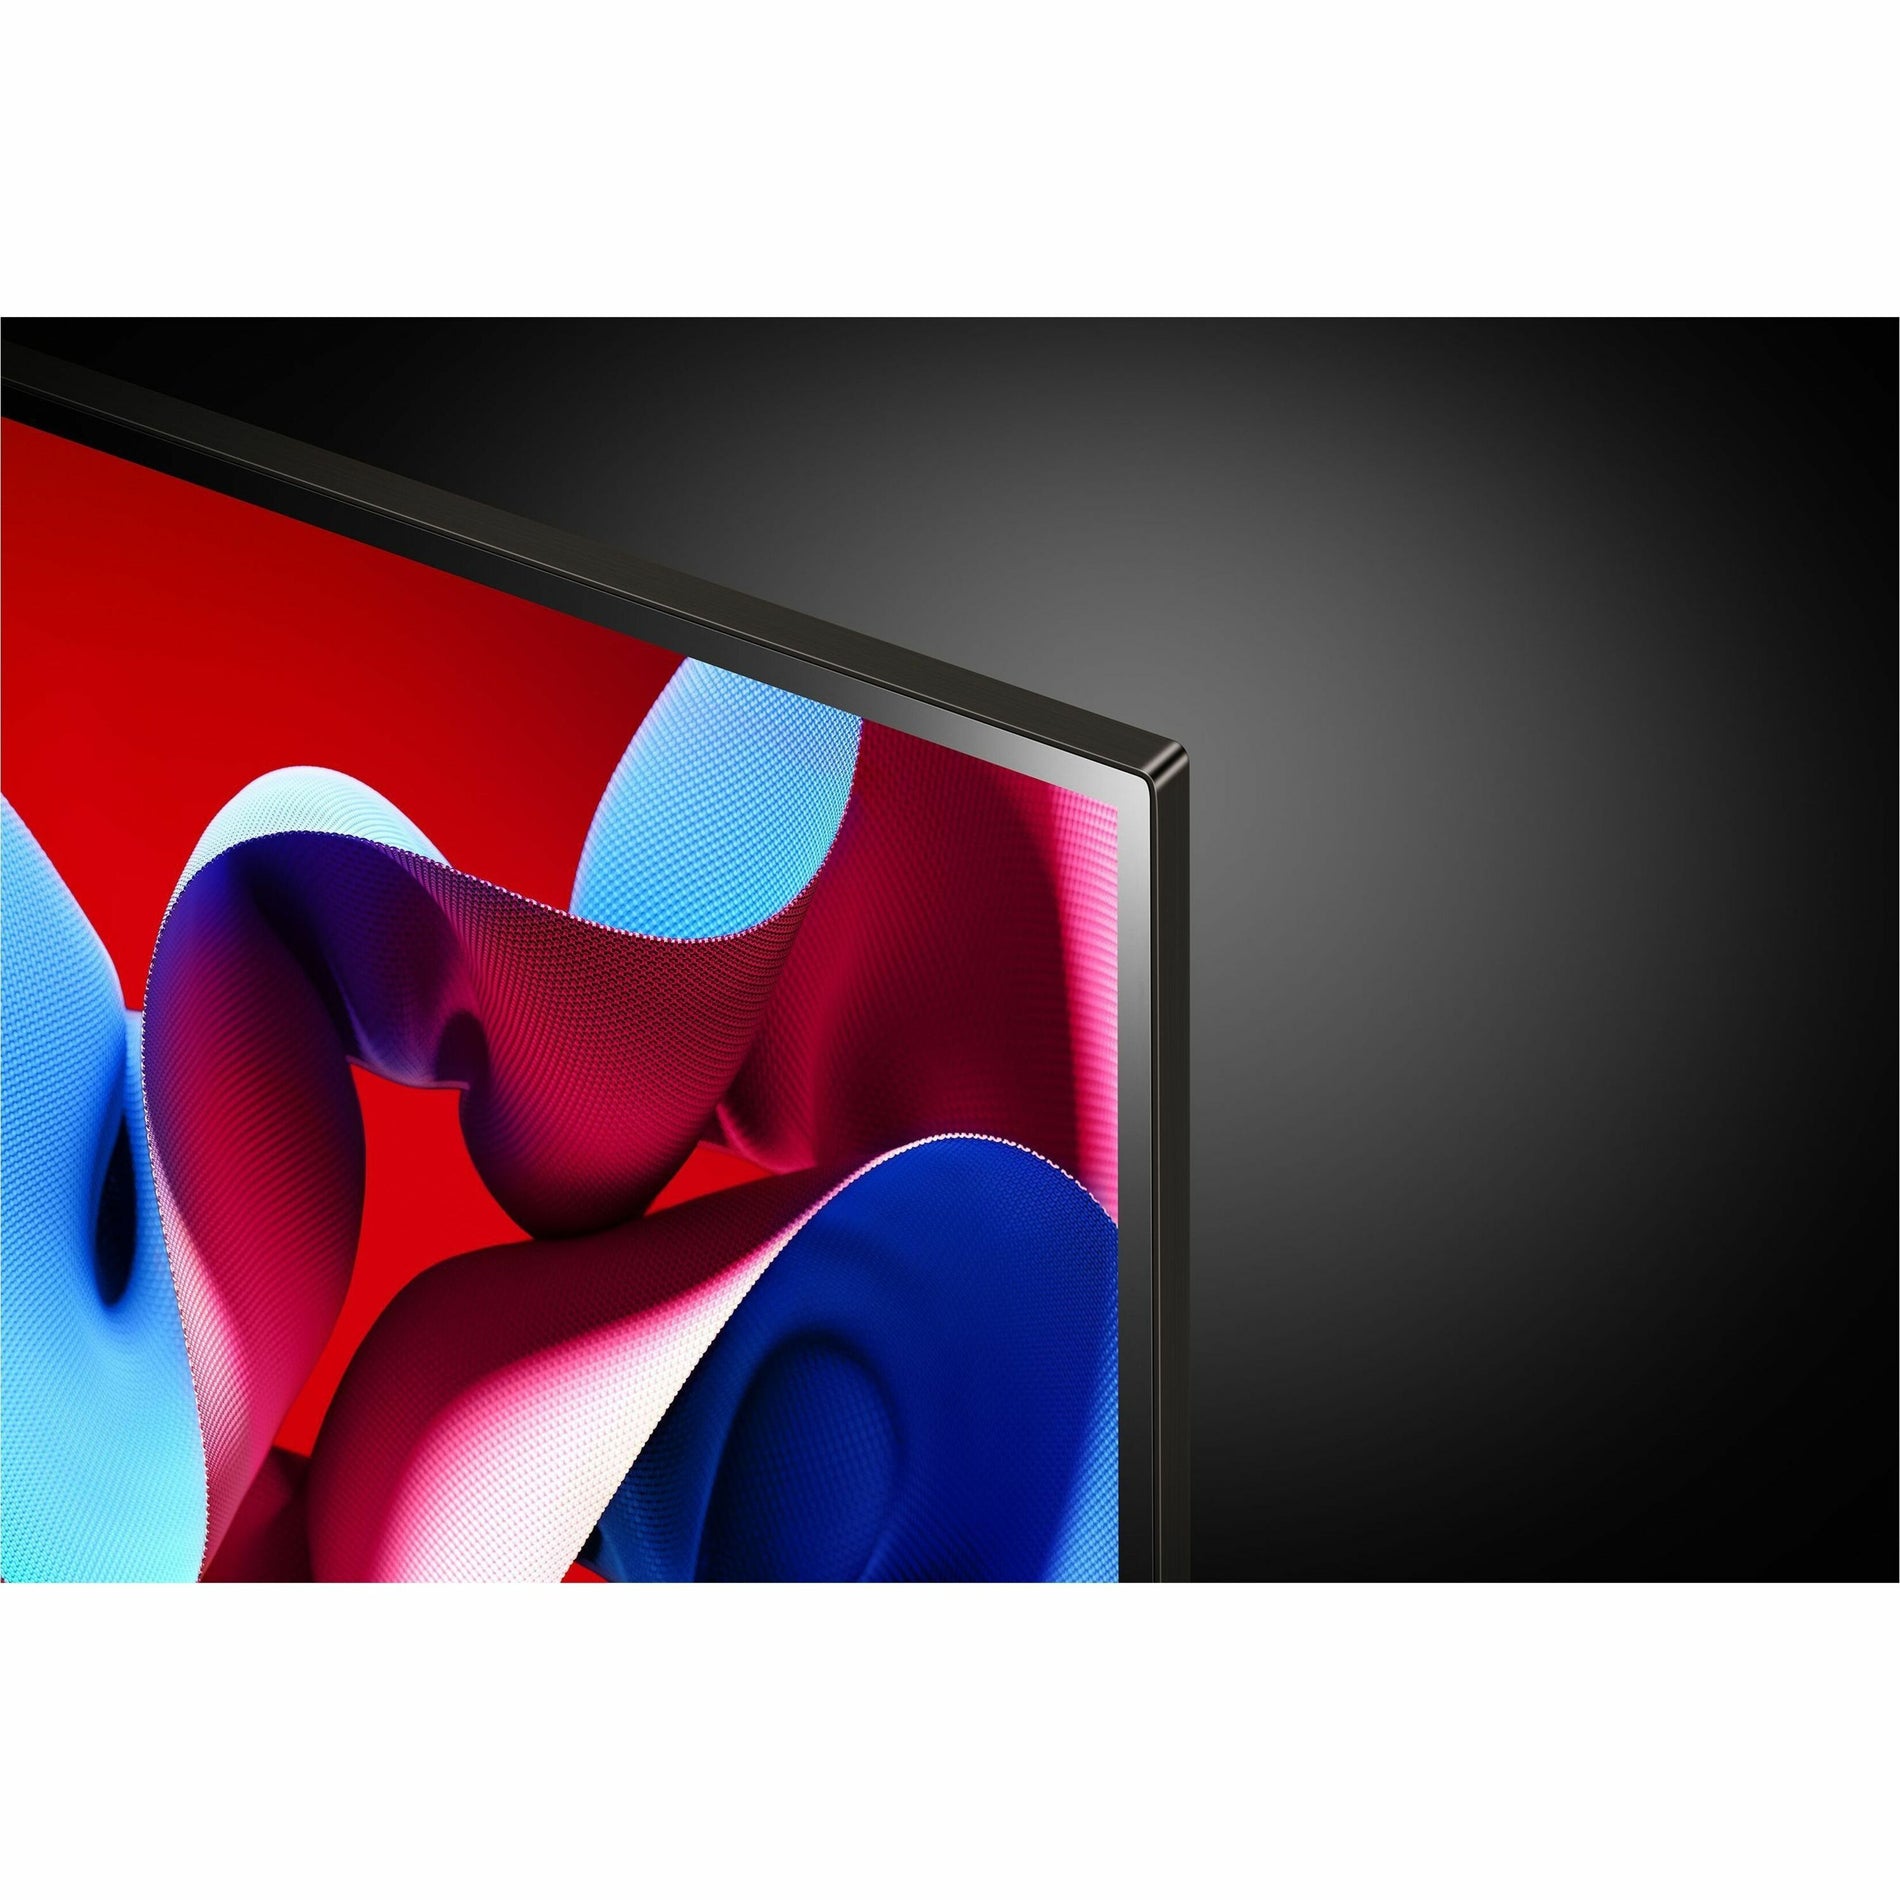 LG evo C4 OLED42C4PUA 42.1" Smart OLED TV - 4K UHDTV